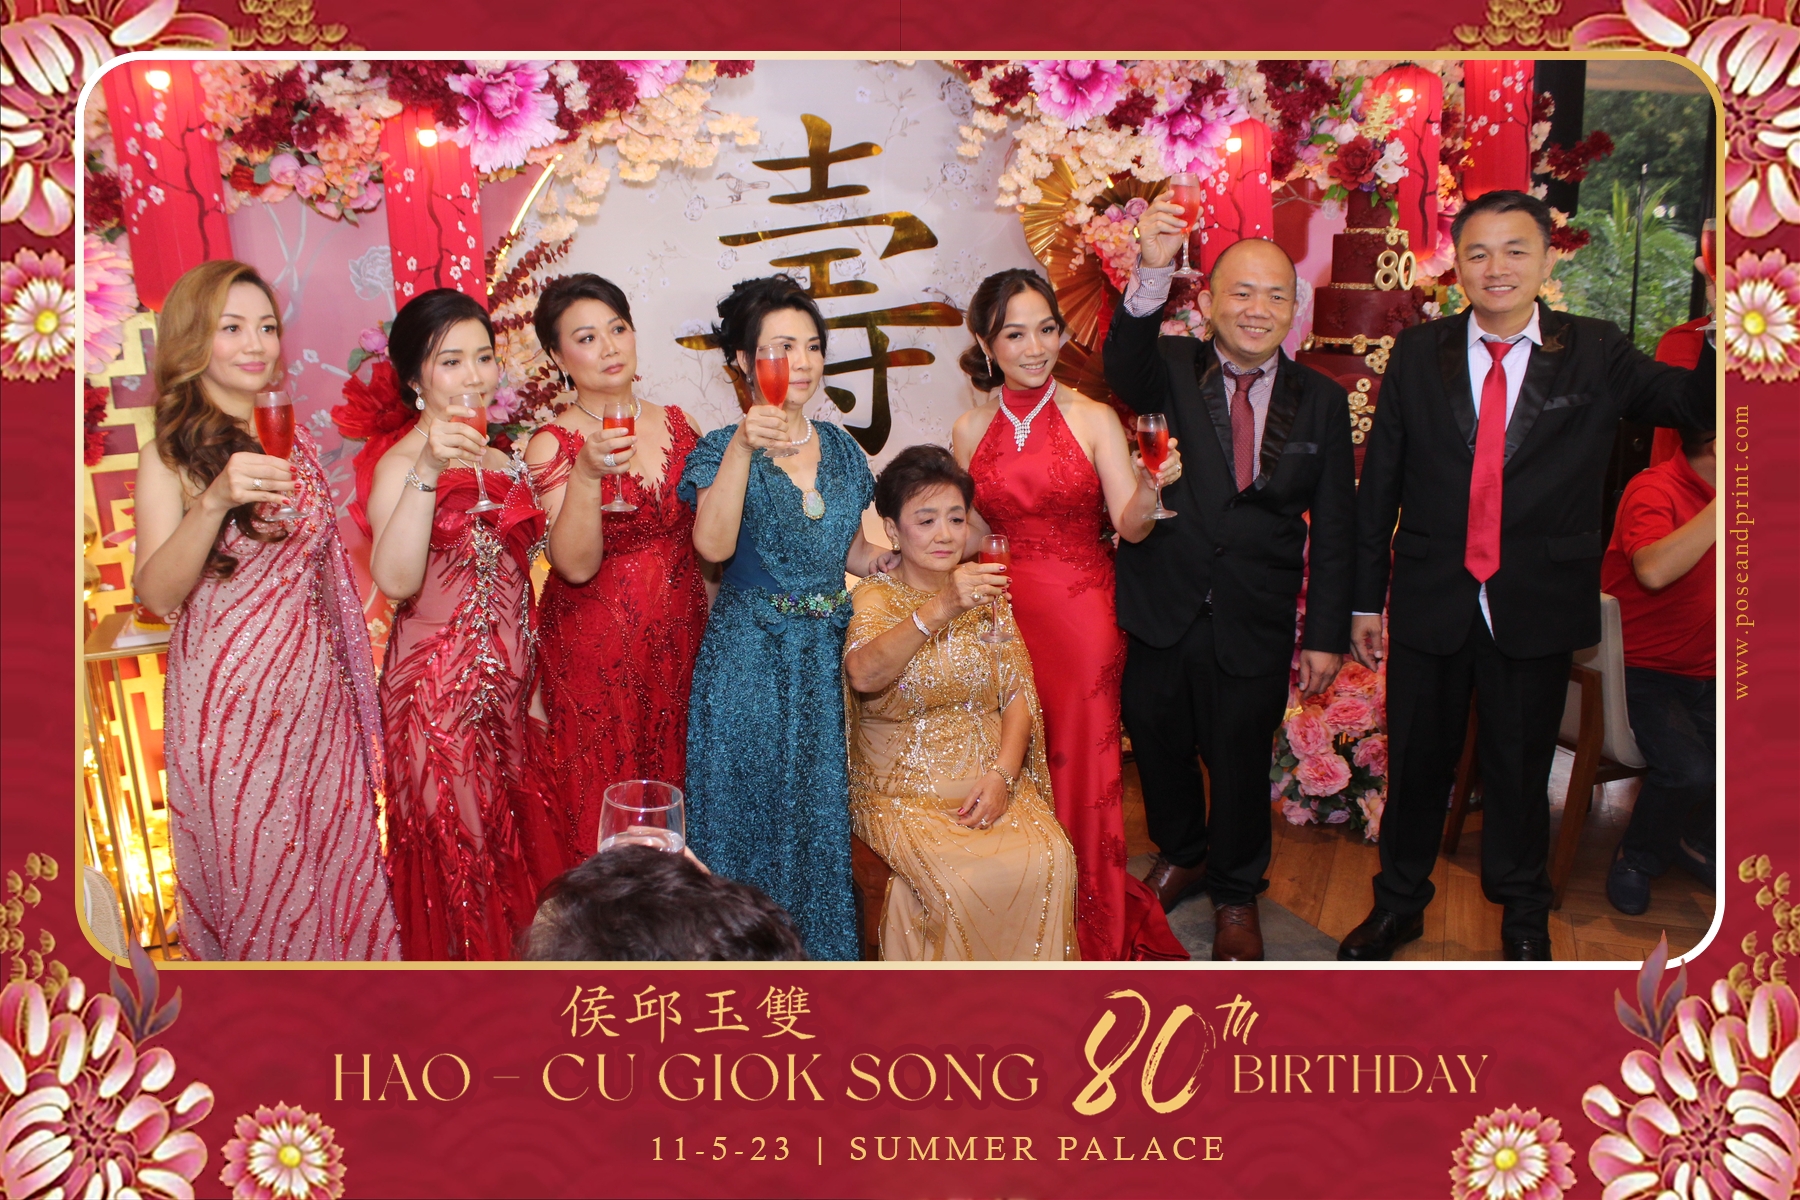 Hao Cu Giok Song’s 80th Birthday – Photoman